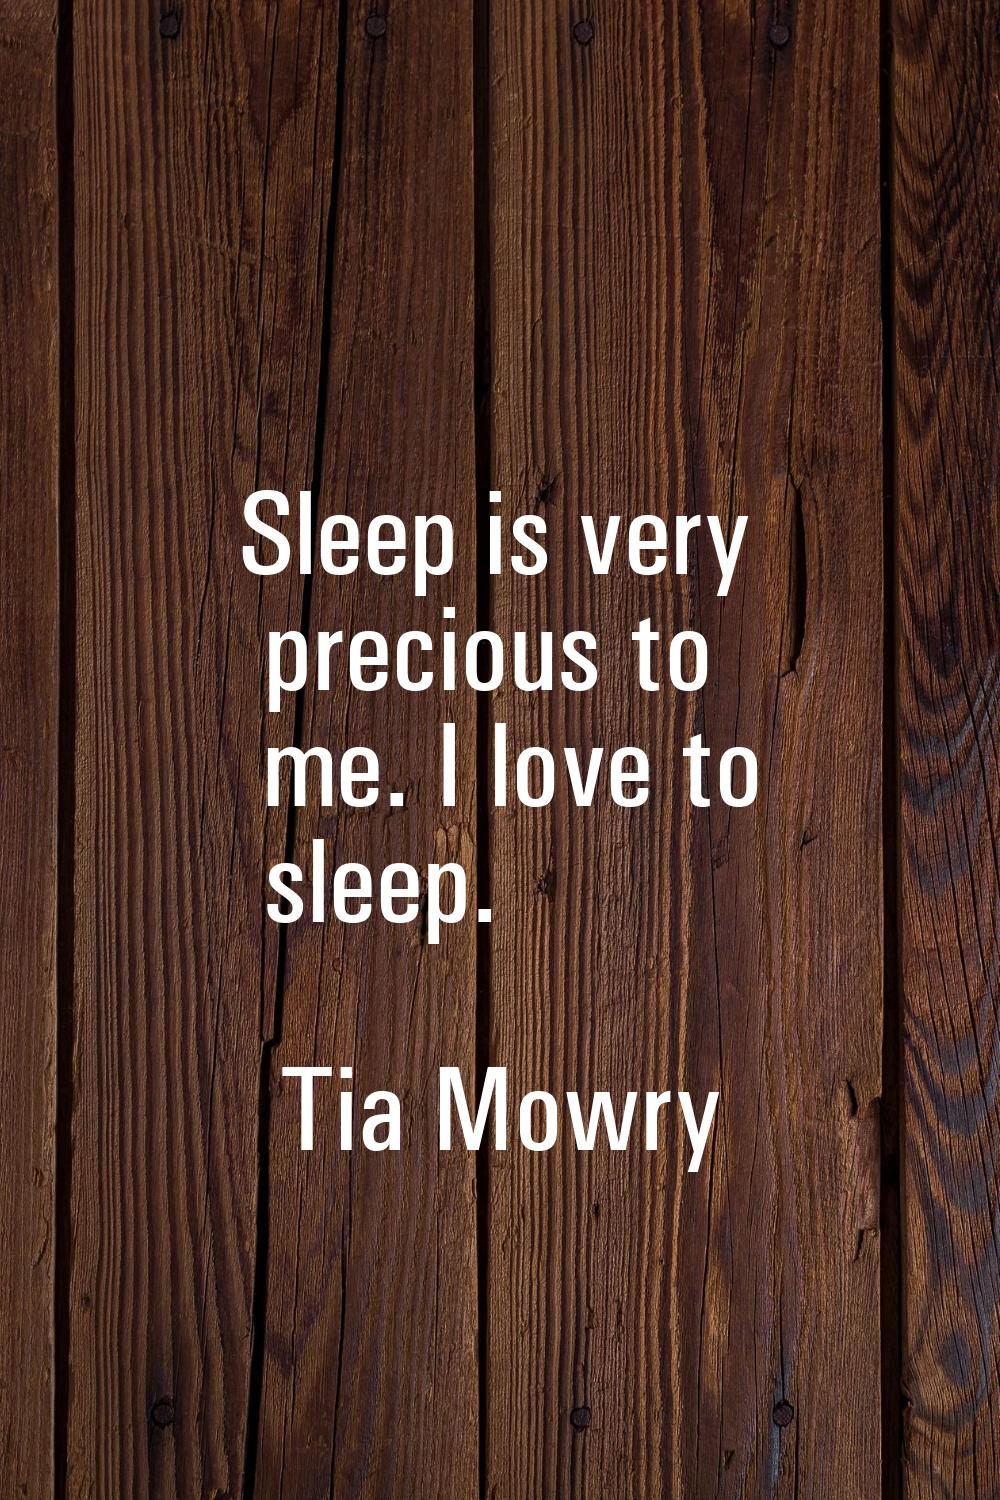 Sleep is very precious to me. I love to sleep.